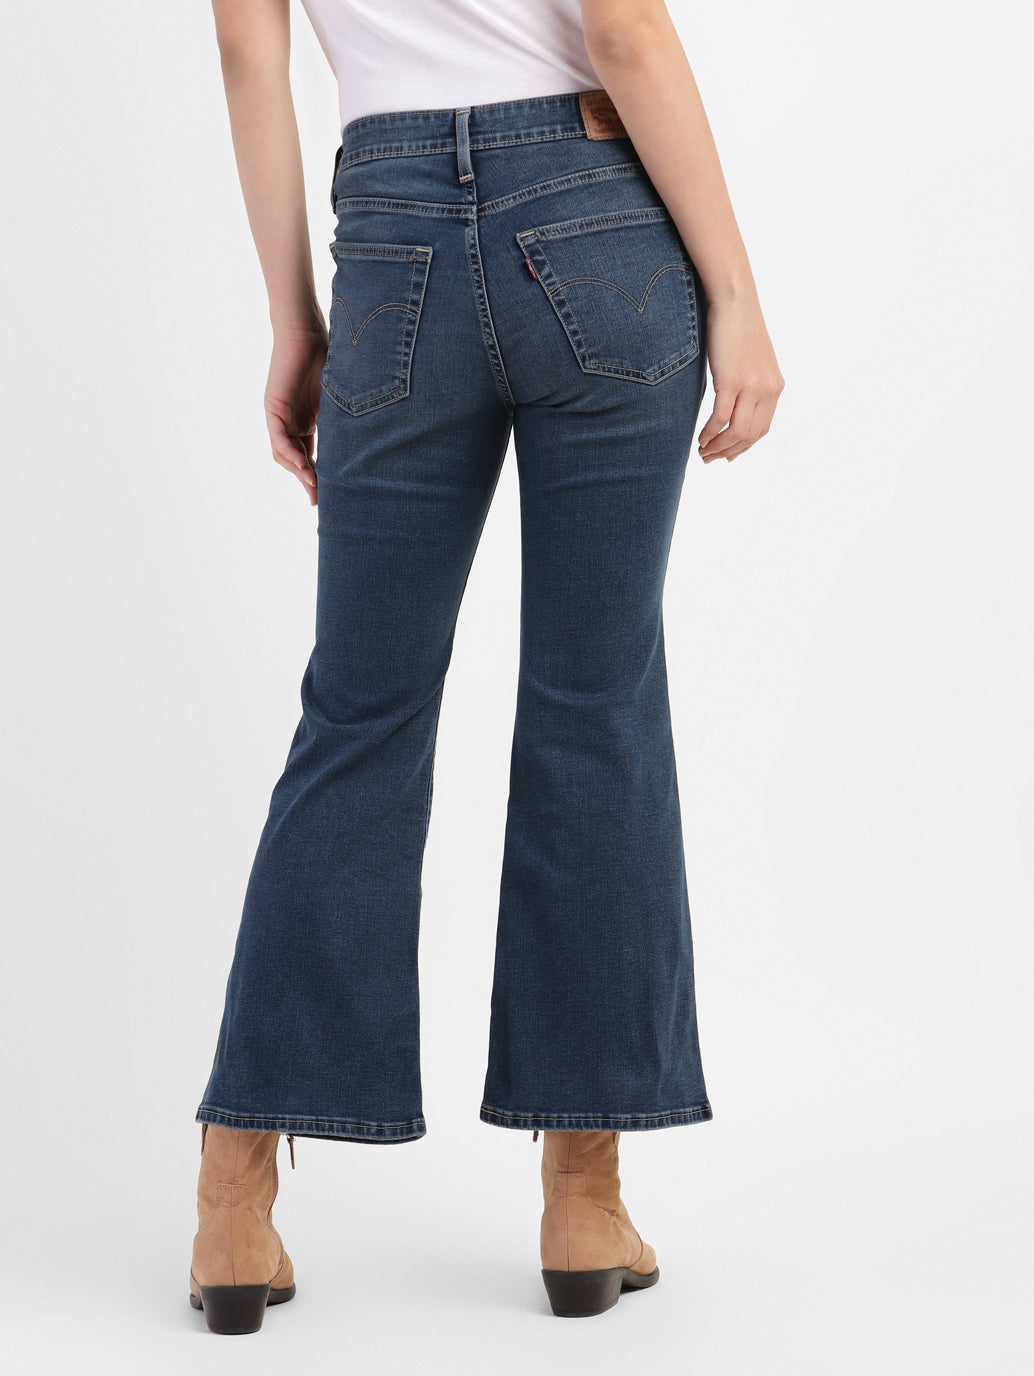 Women's 726 Bootcut Jeans